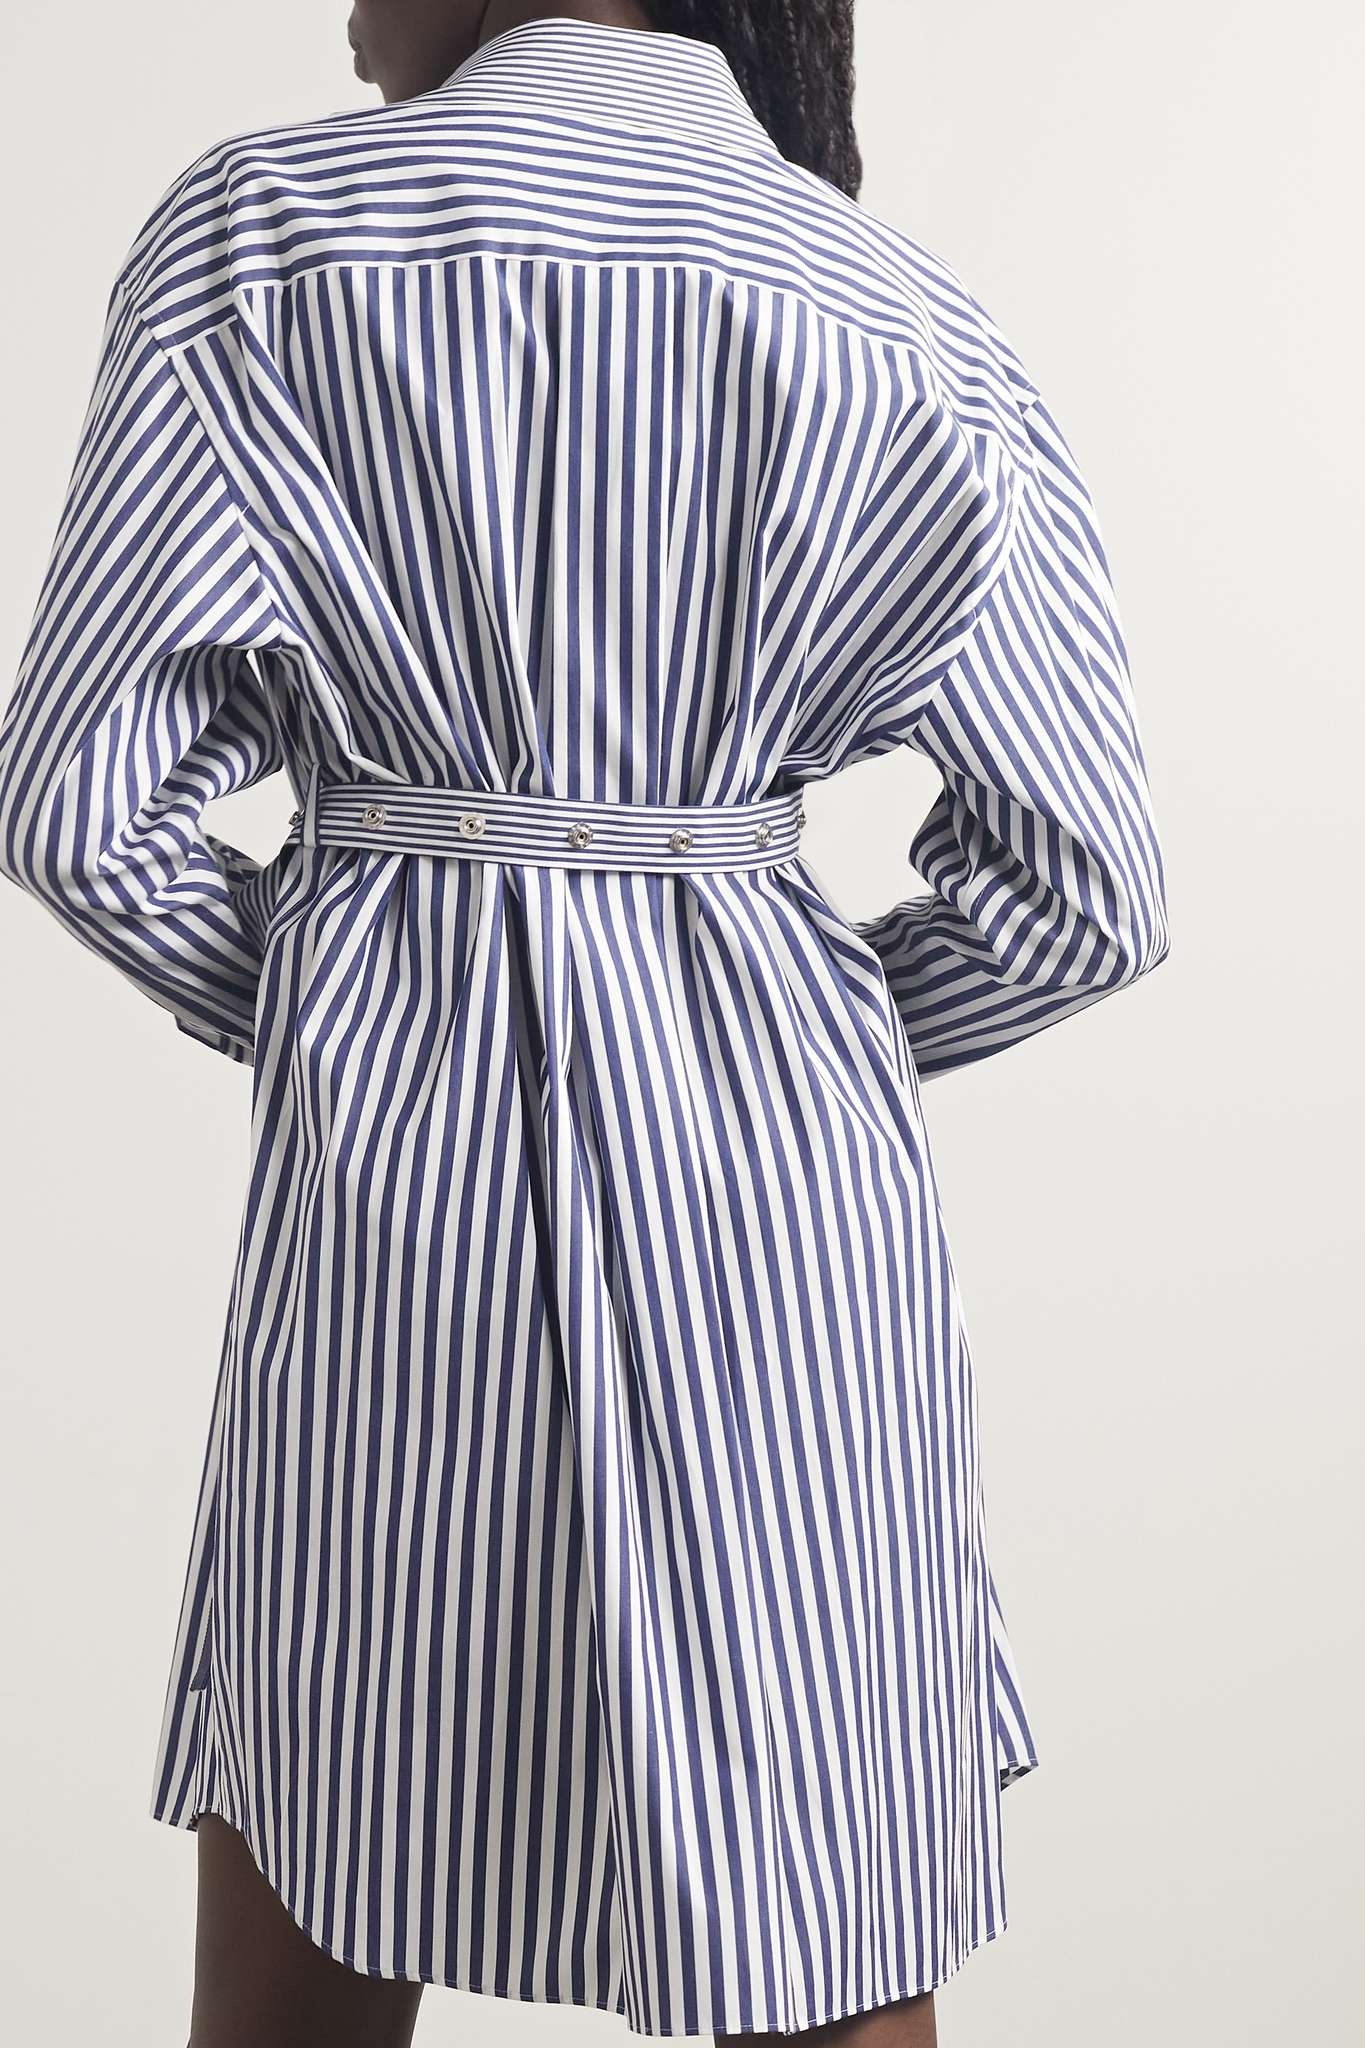 sacai striped cotton shirt - Blue